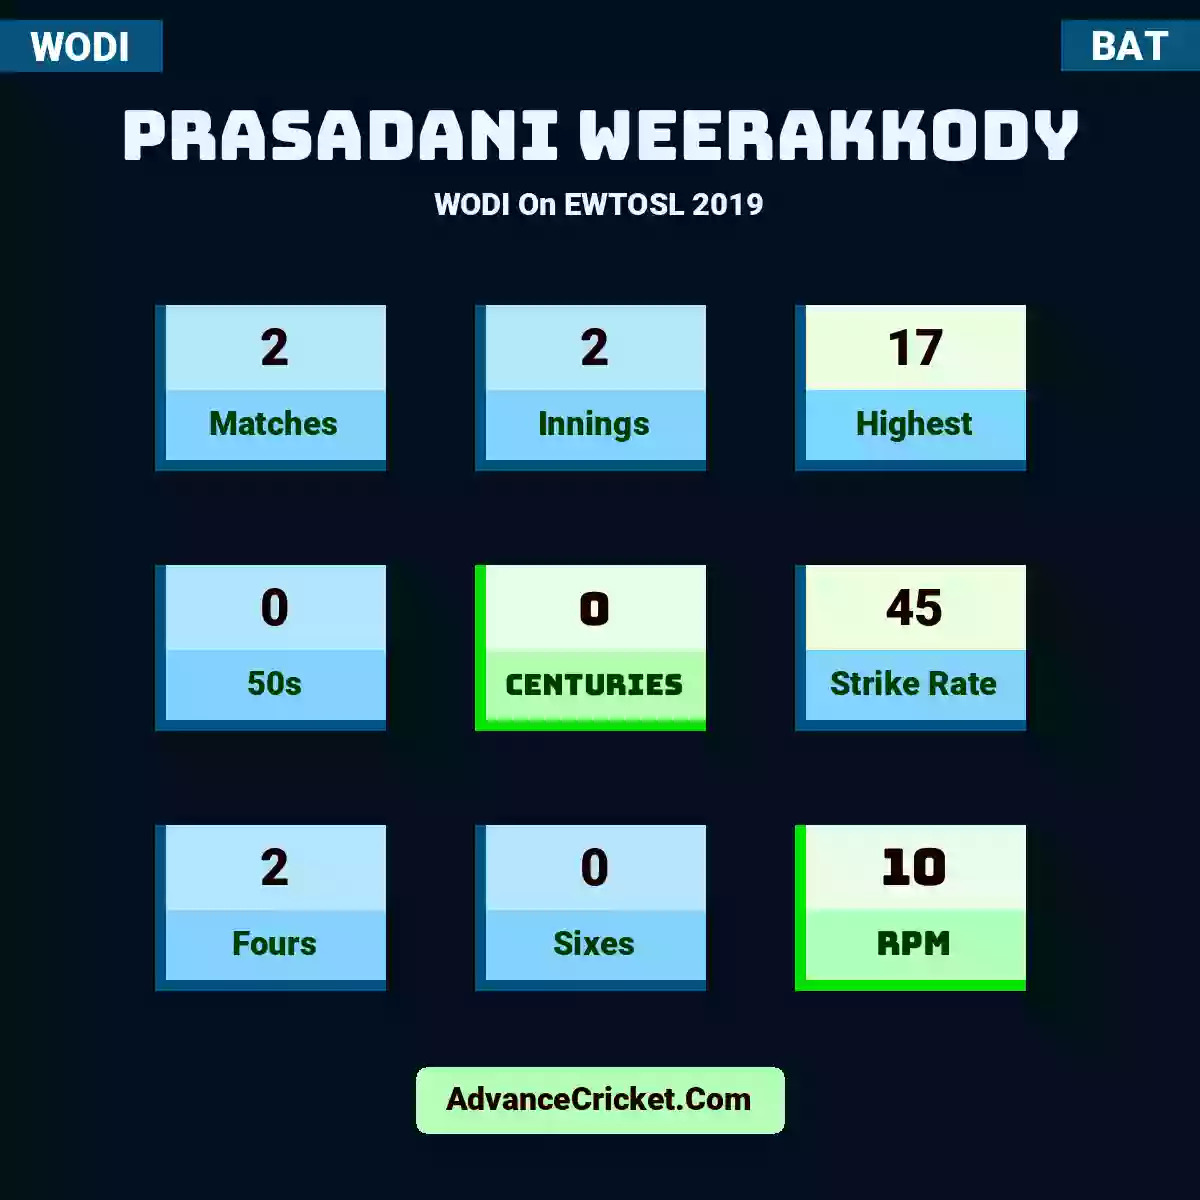 Prasadani Weerakkody WODI  On EWTOSL 2019, Prasadani Weerakkody played 2 matches, scored 17 runs as highest, 0 half-centuries, and 0 centuries, with a strike rate of 45. P.Weerakkody hit 2 fours and 0 sixes, with an RPM of 10.